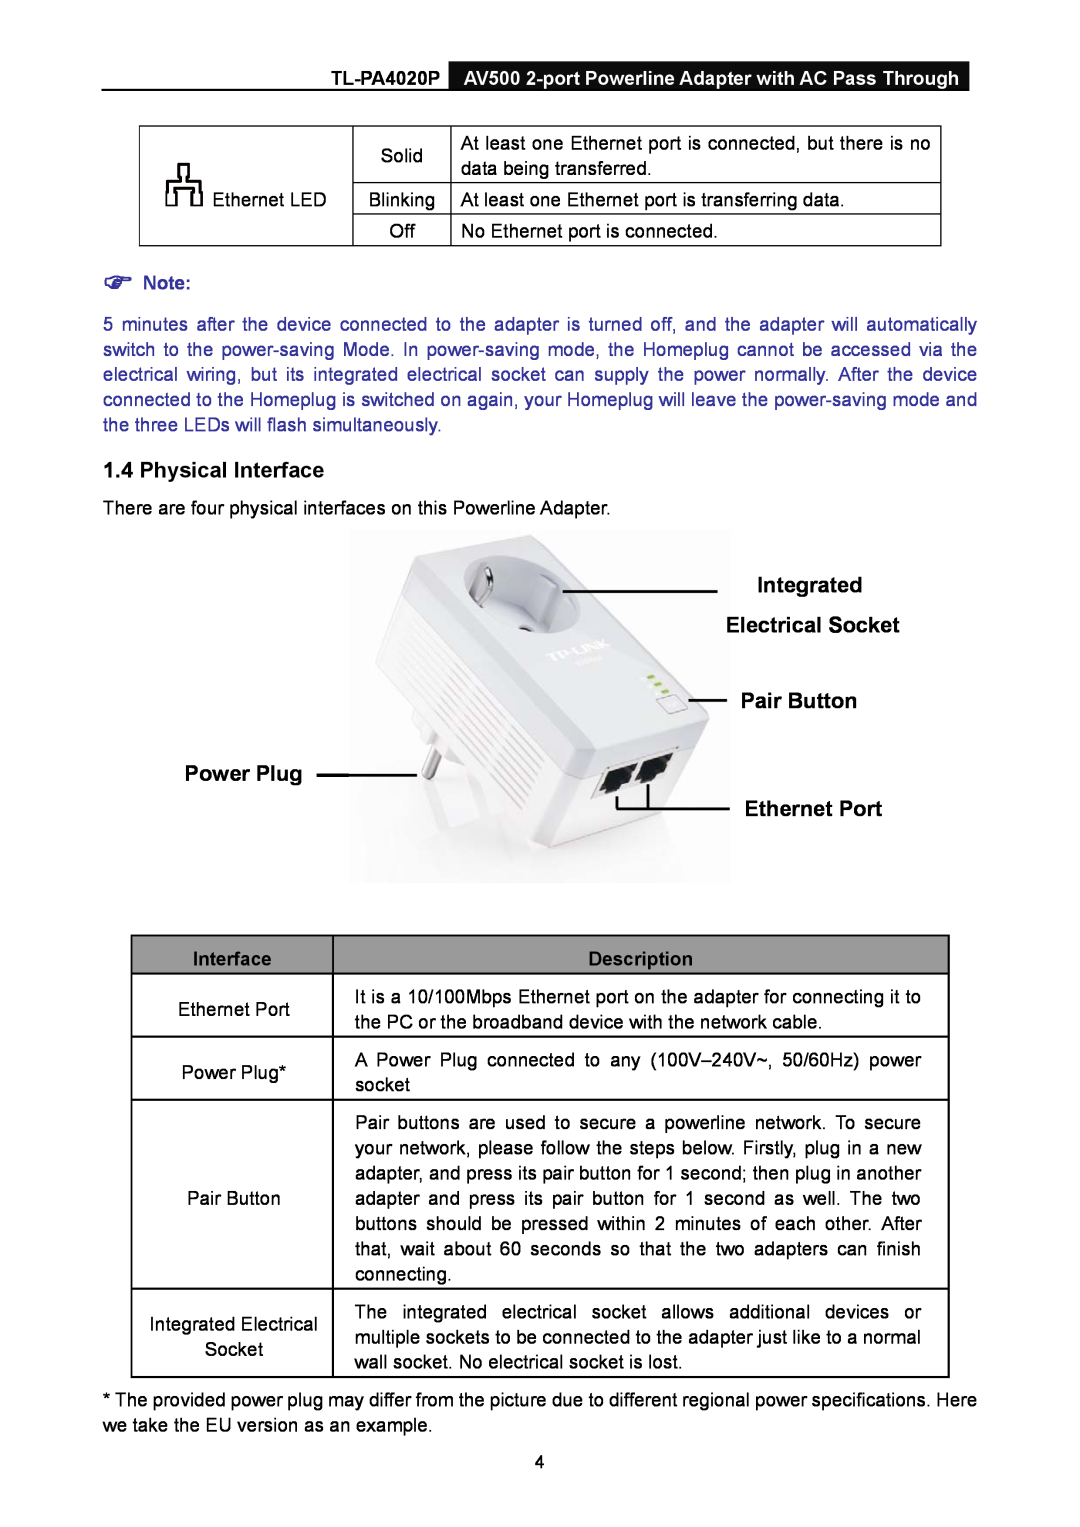 TP-Link TL-PA4020P Physical Interface, Integrated Electrical Socket Pair Button Power Plug Ethernet Port, Description 